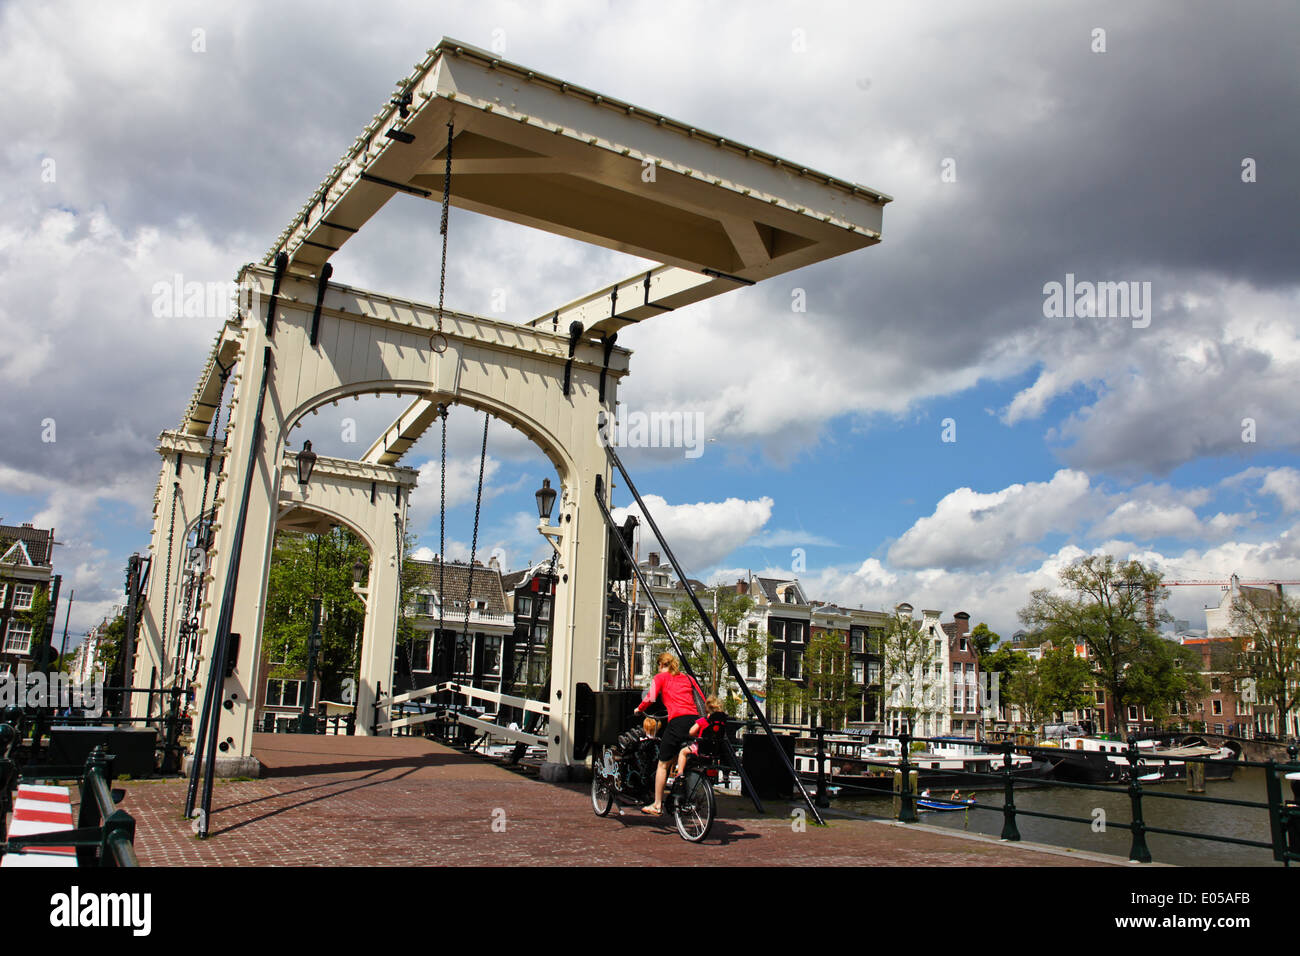 Amsterdam in the Netherlands, Amsterdam in den Niederlanden Stock Photo